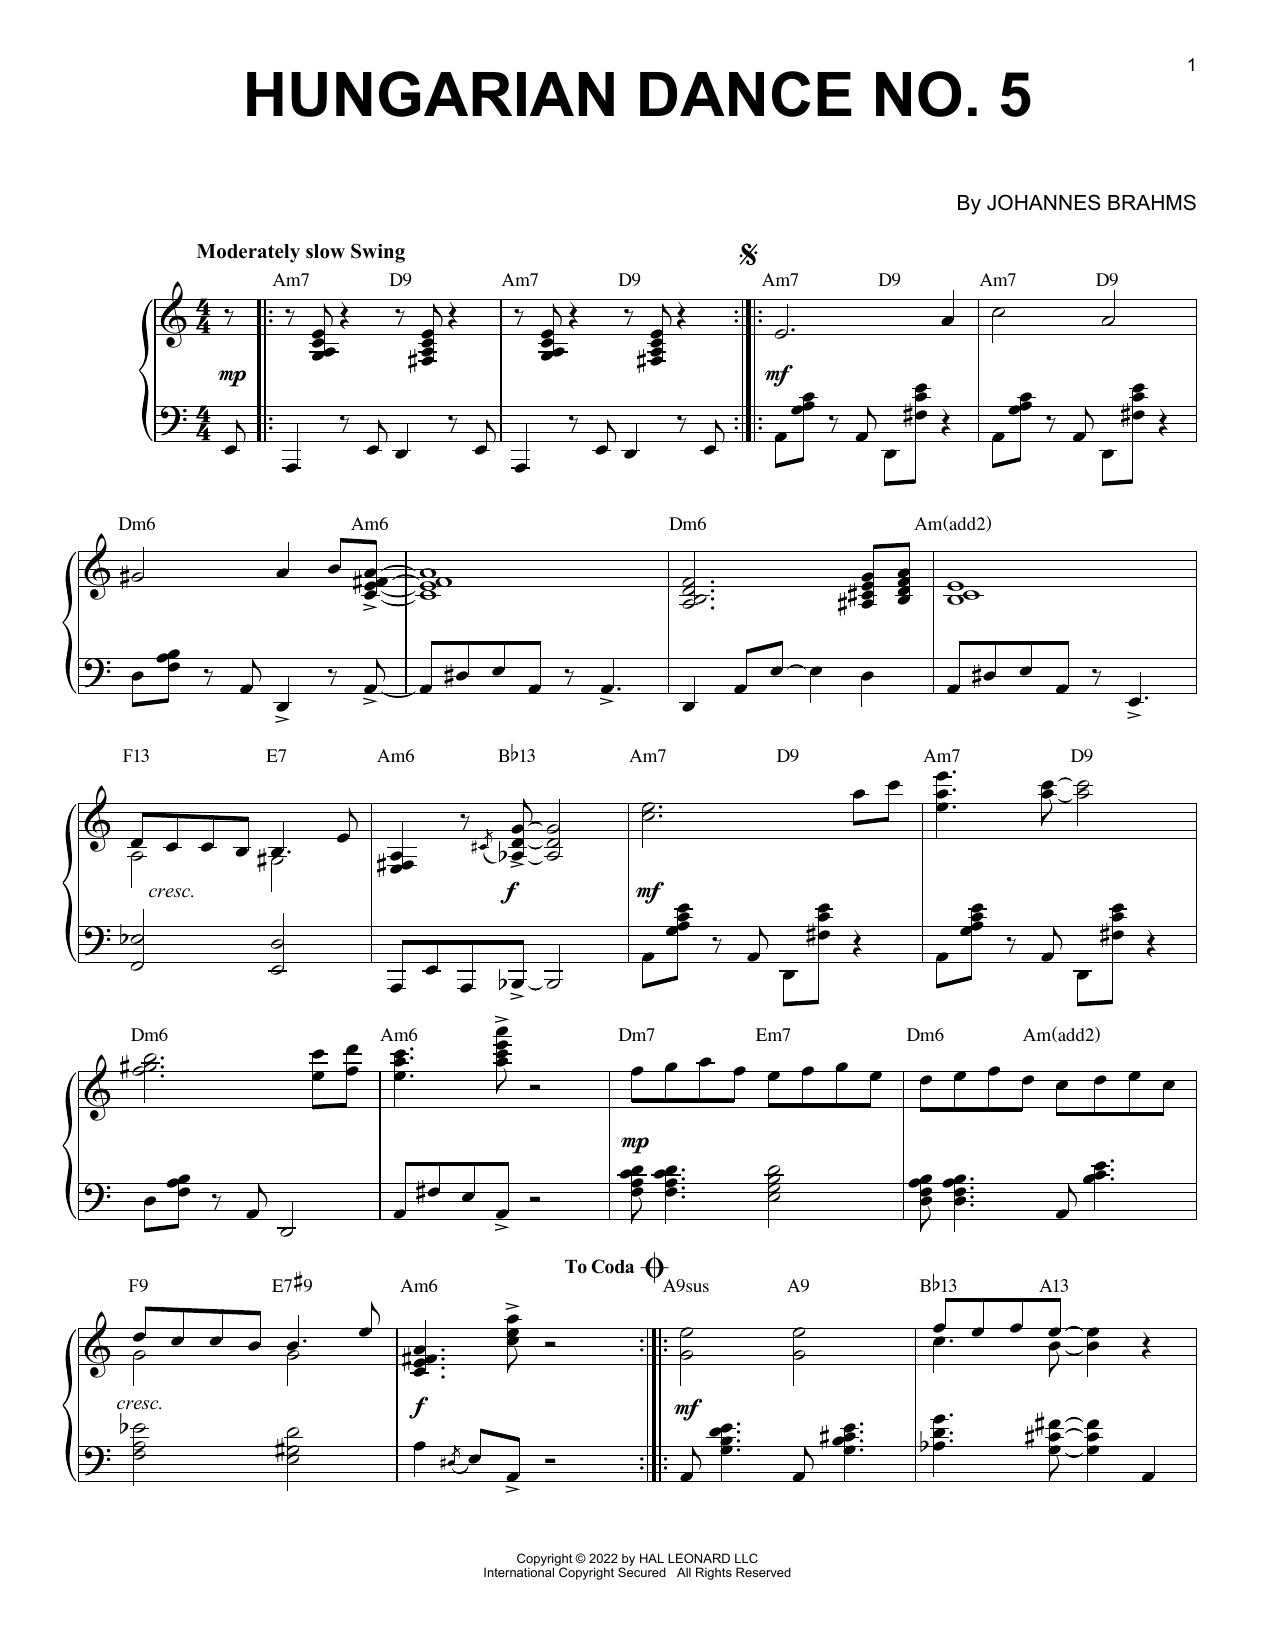 Download Johannes Brahms Hungarian Dance No. 5 [Jazz version] (a Sheet Music